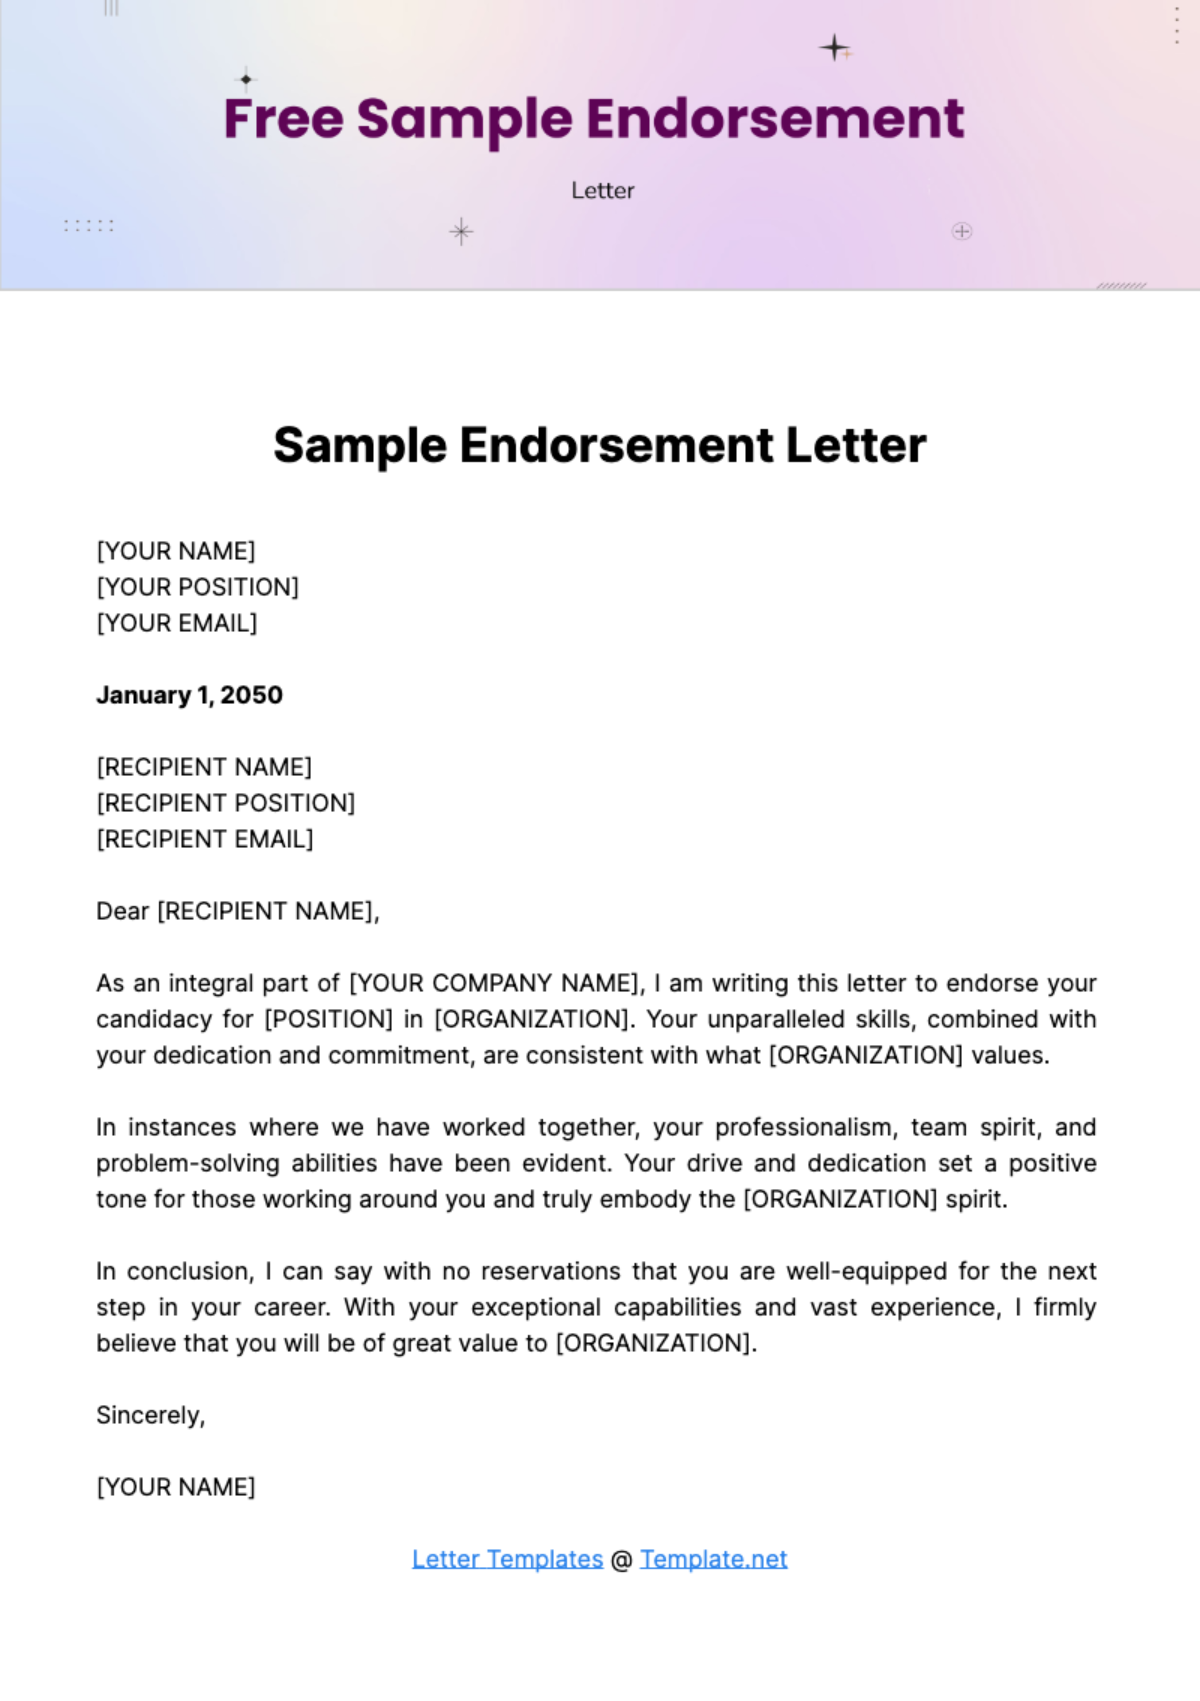 Sample Endorsement Letter Template